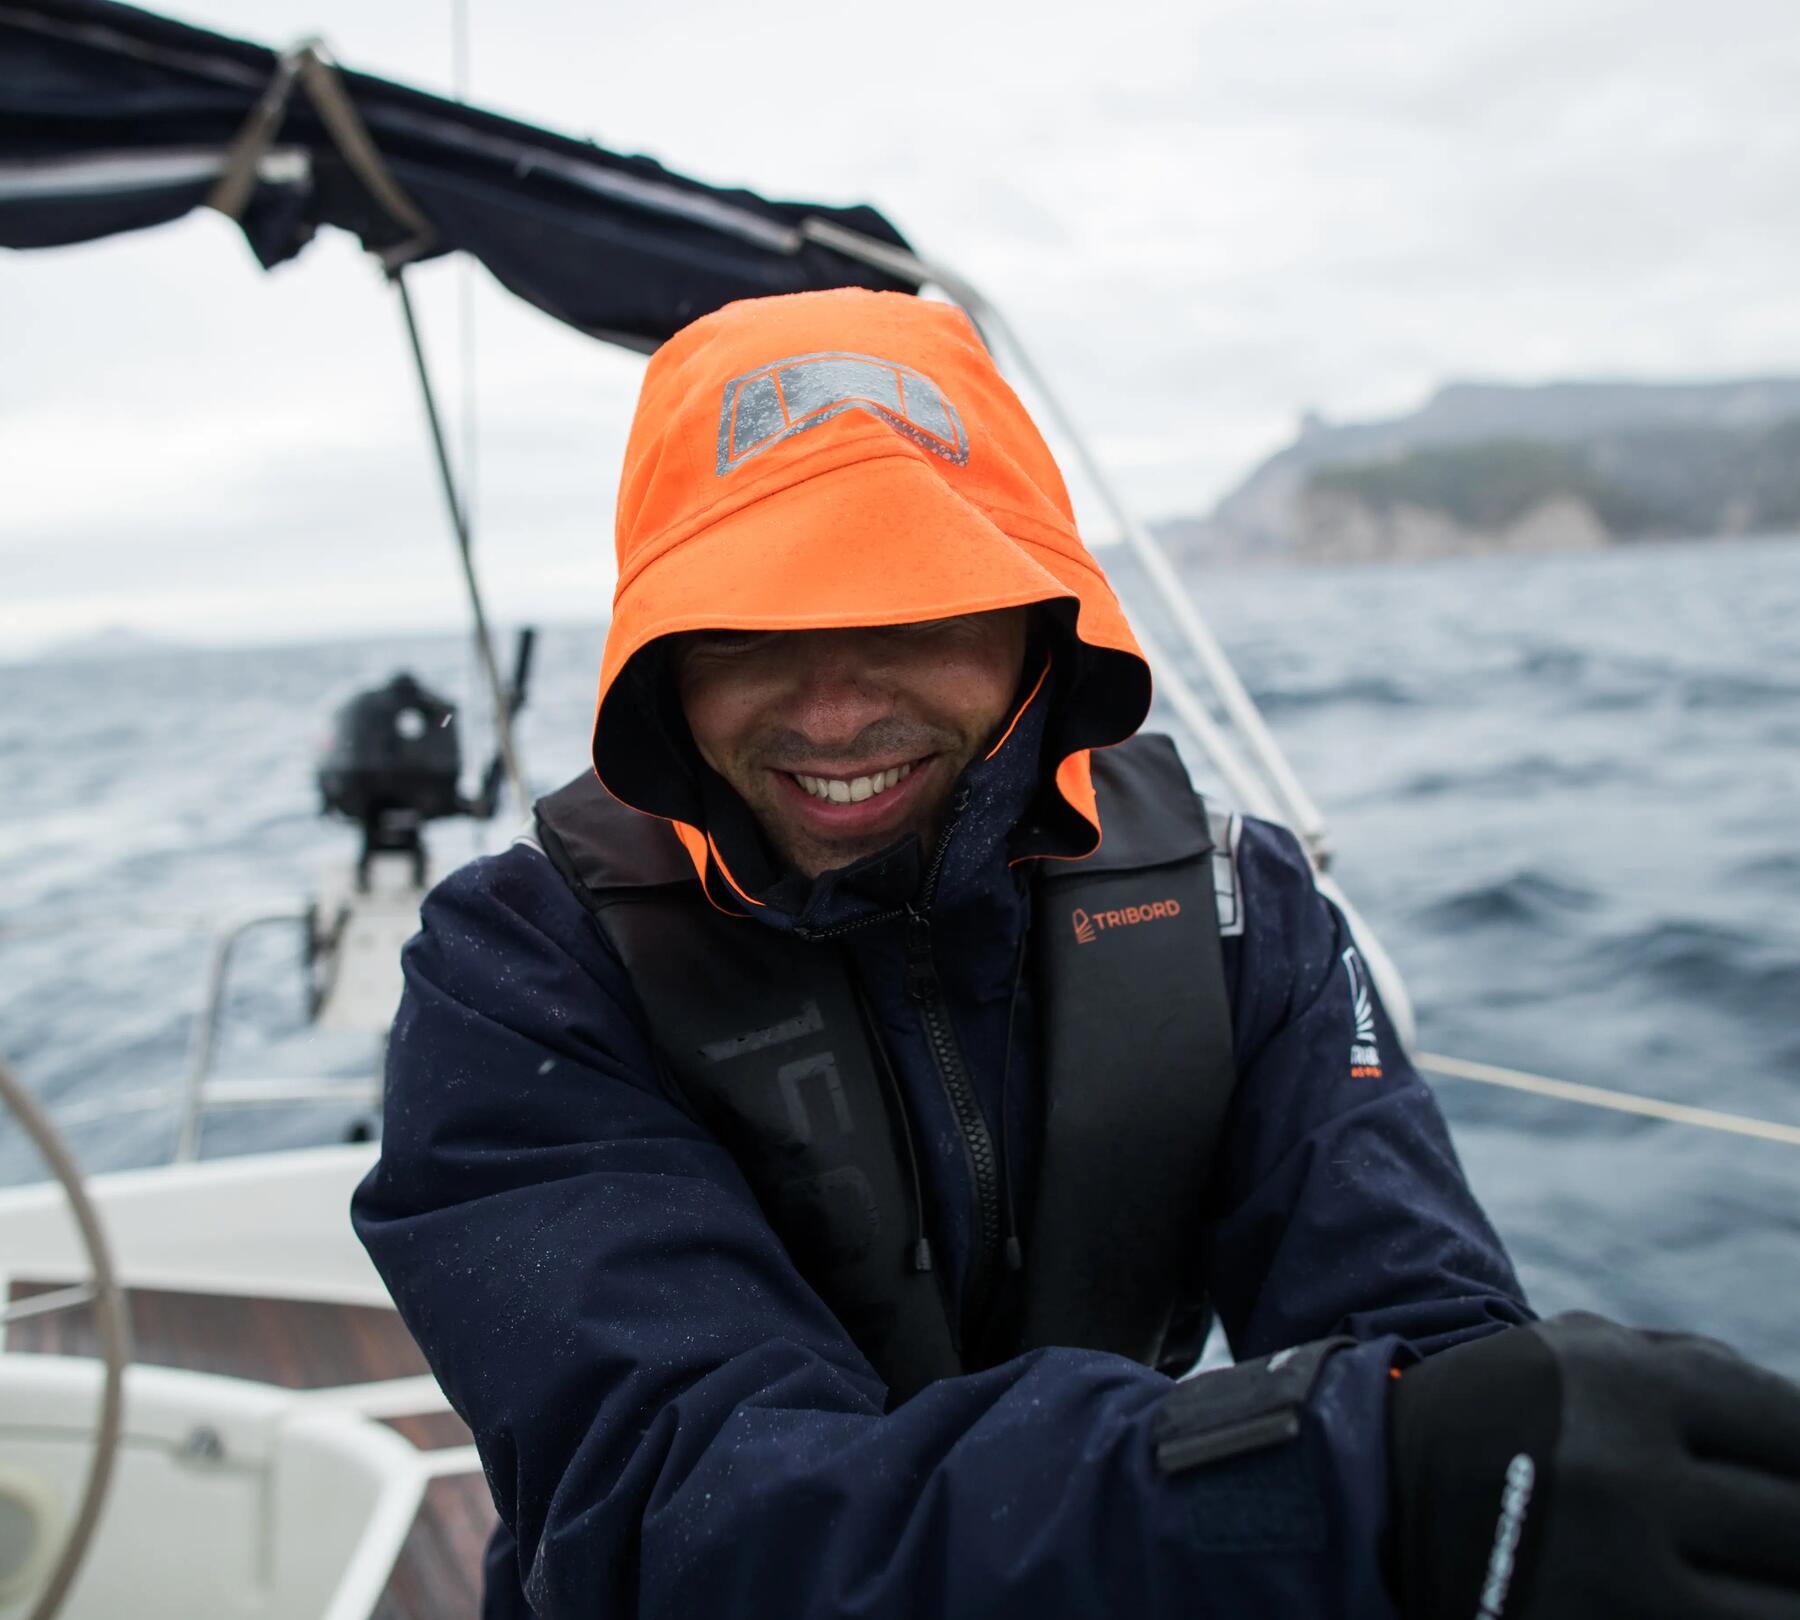 Man on boat, smiling, wearing life jacket